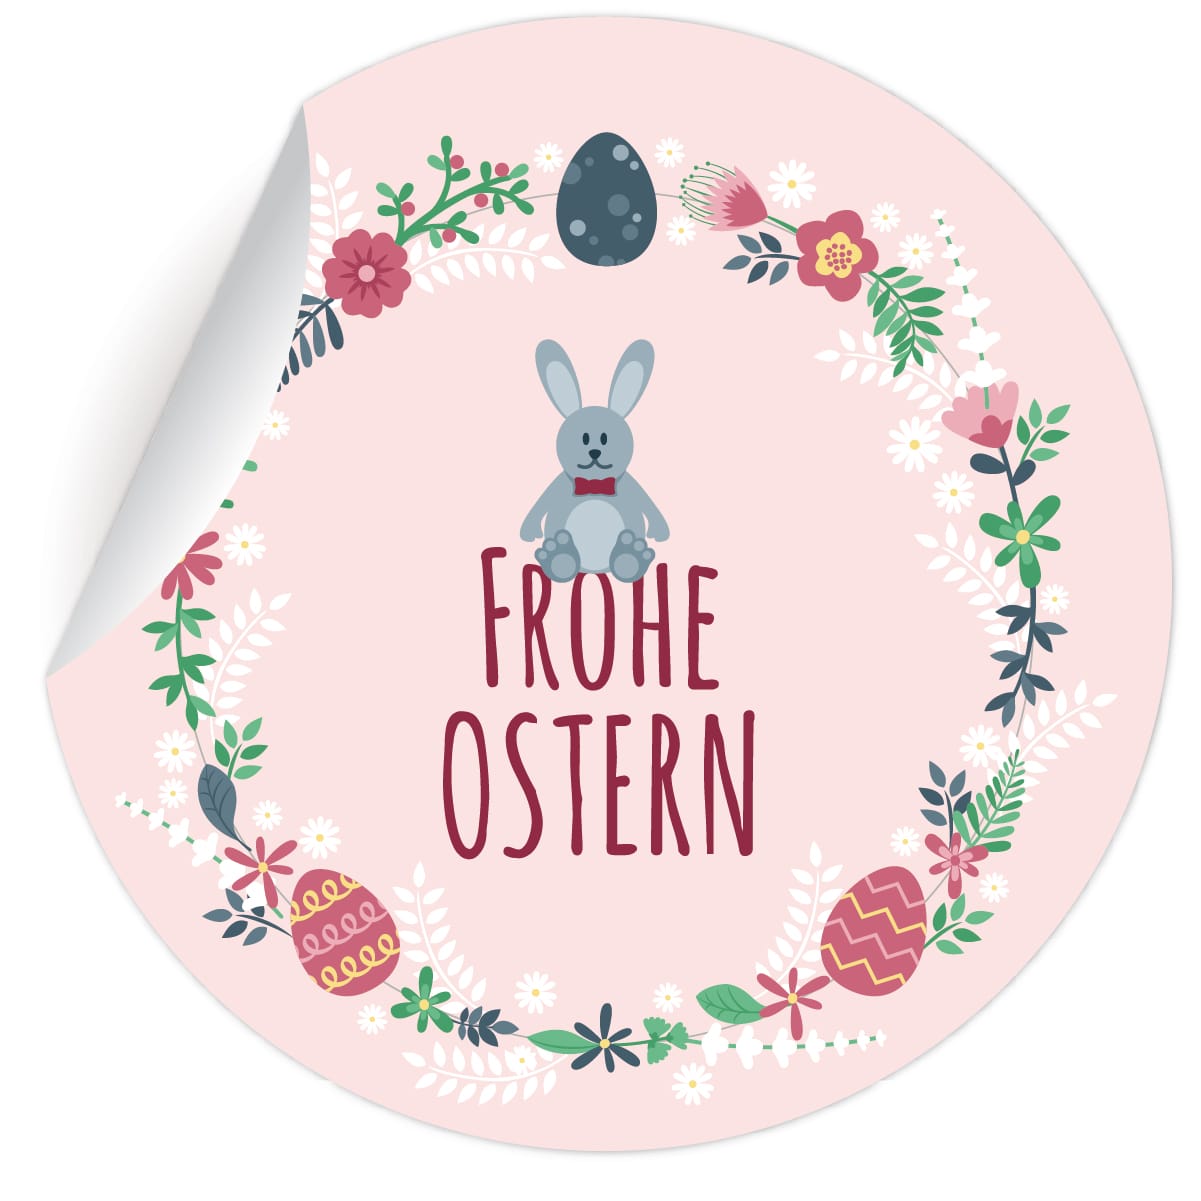 Kartenkaufrausch: Oster Kranz Aufkleber aus unserer Oster Papeterie in rosa